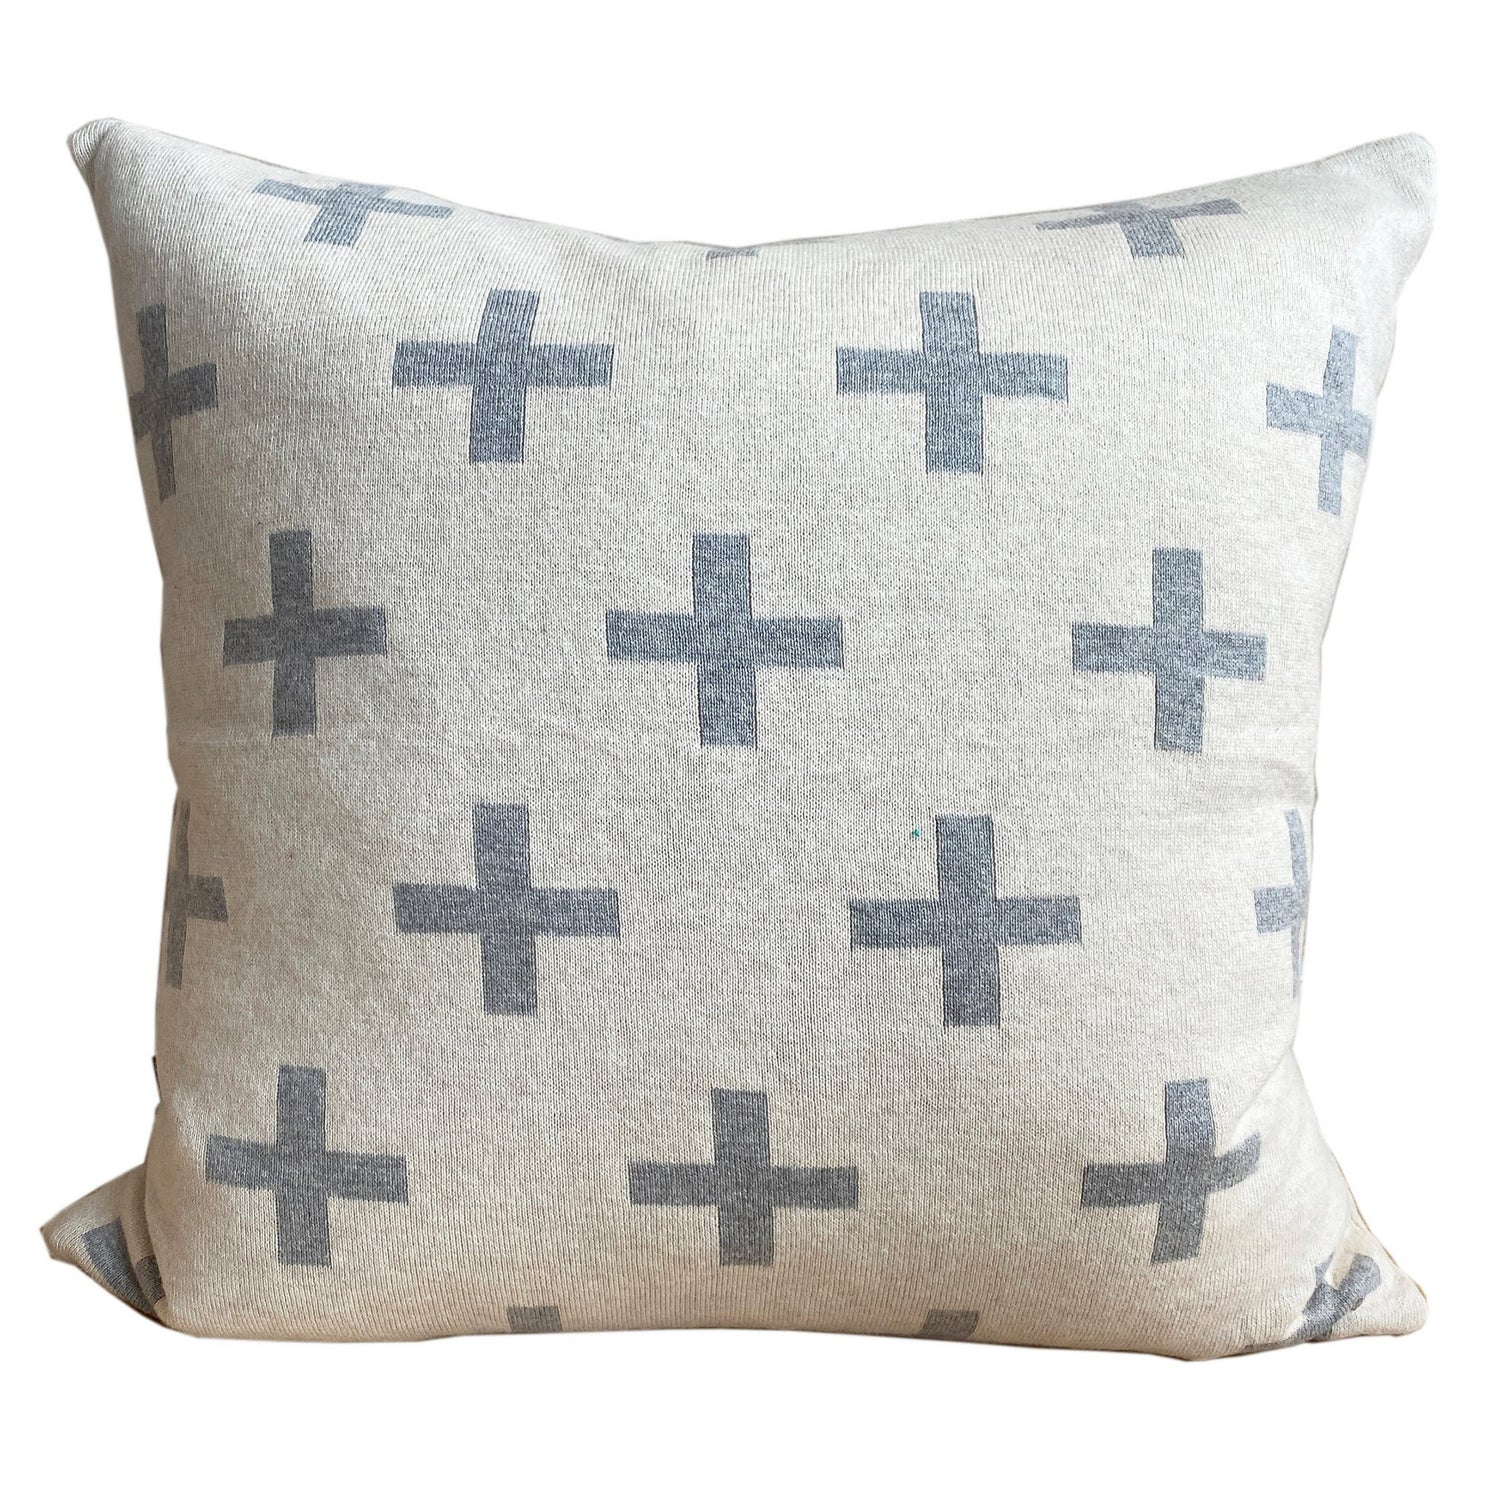 Ane pillow-cover grey, soft cotton knit